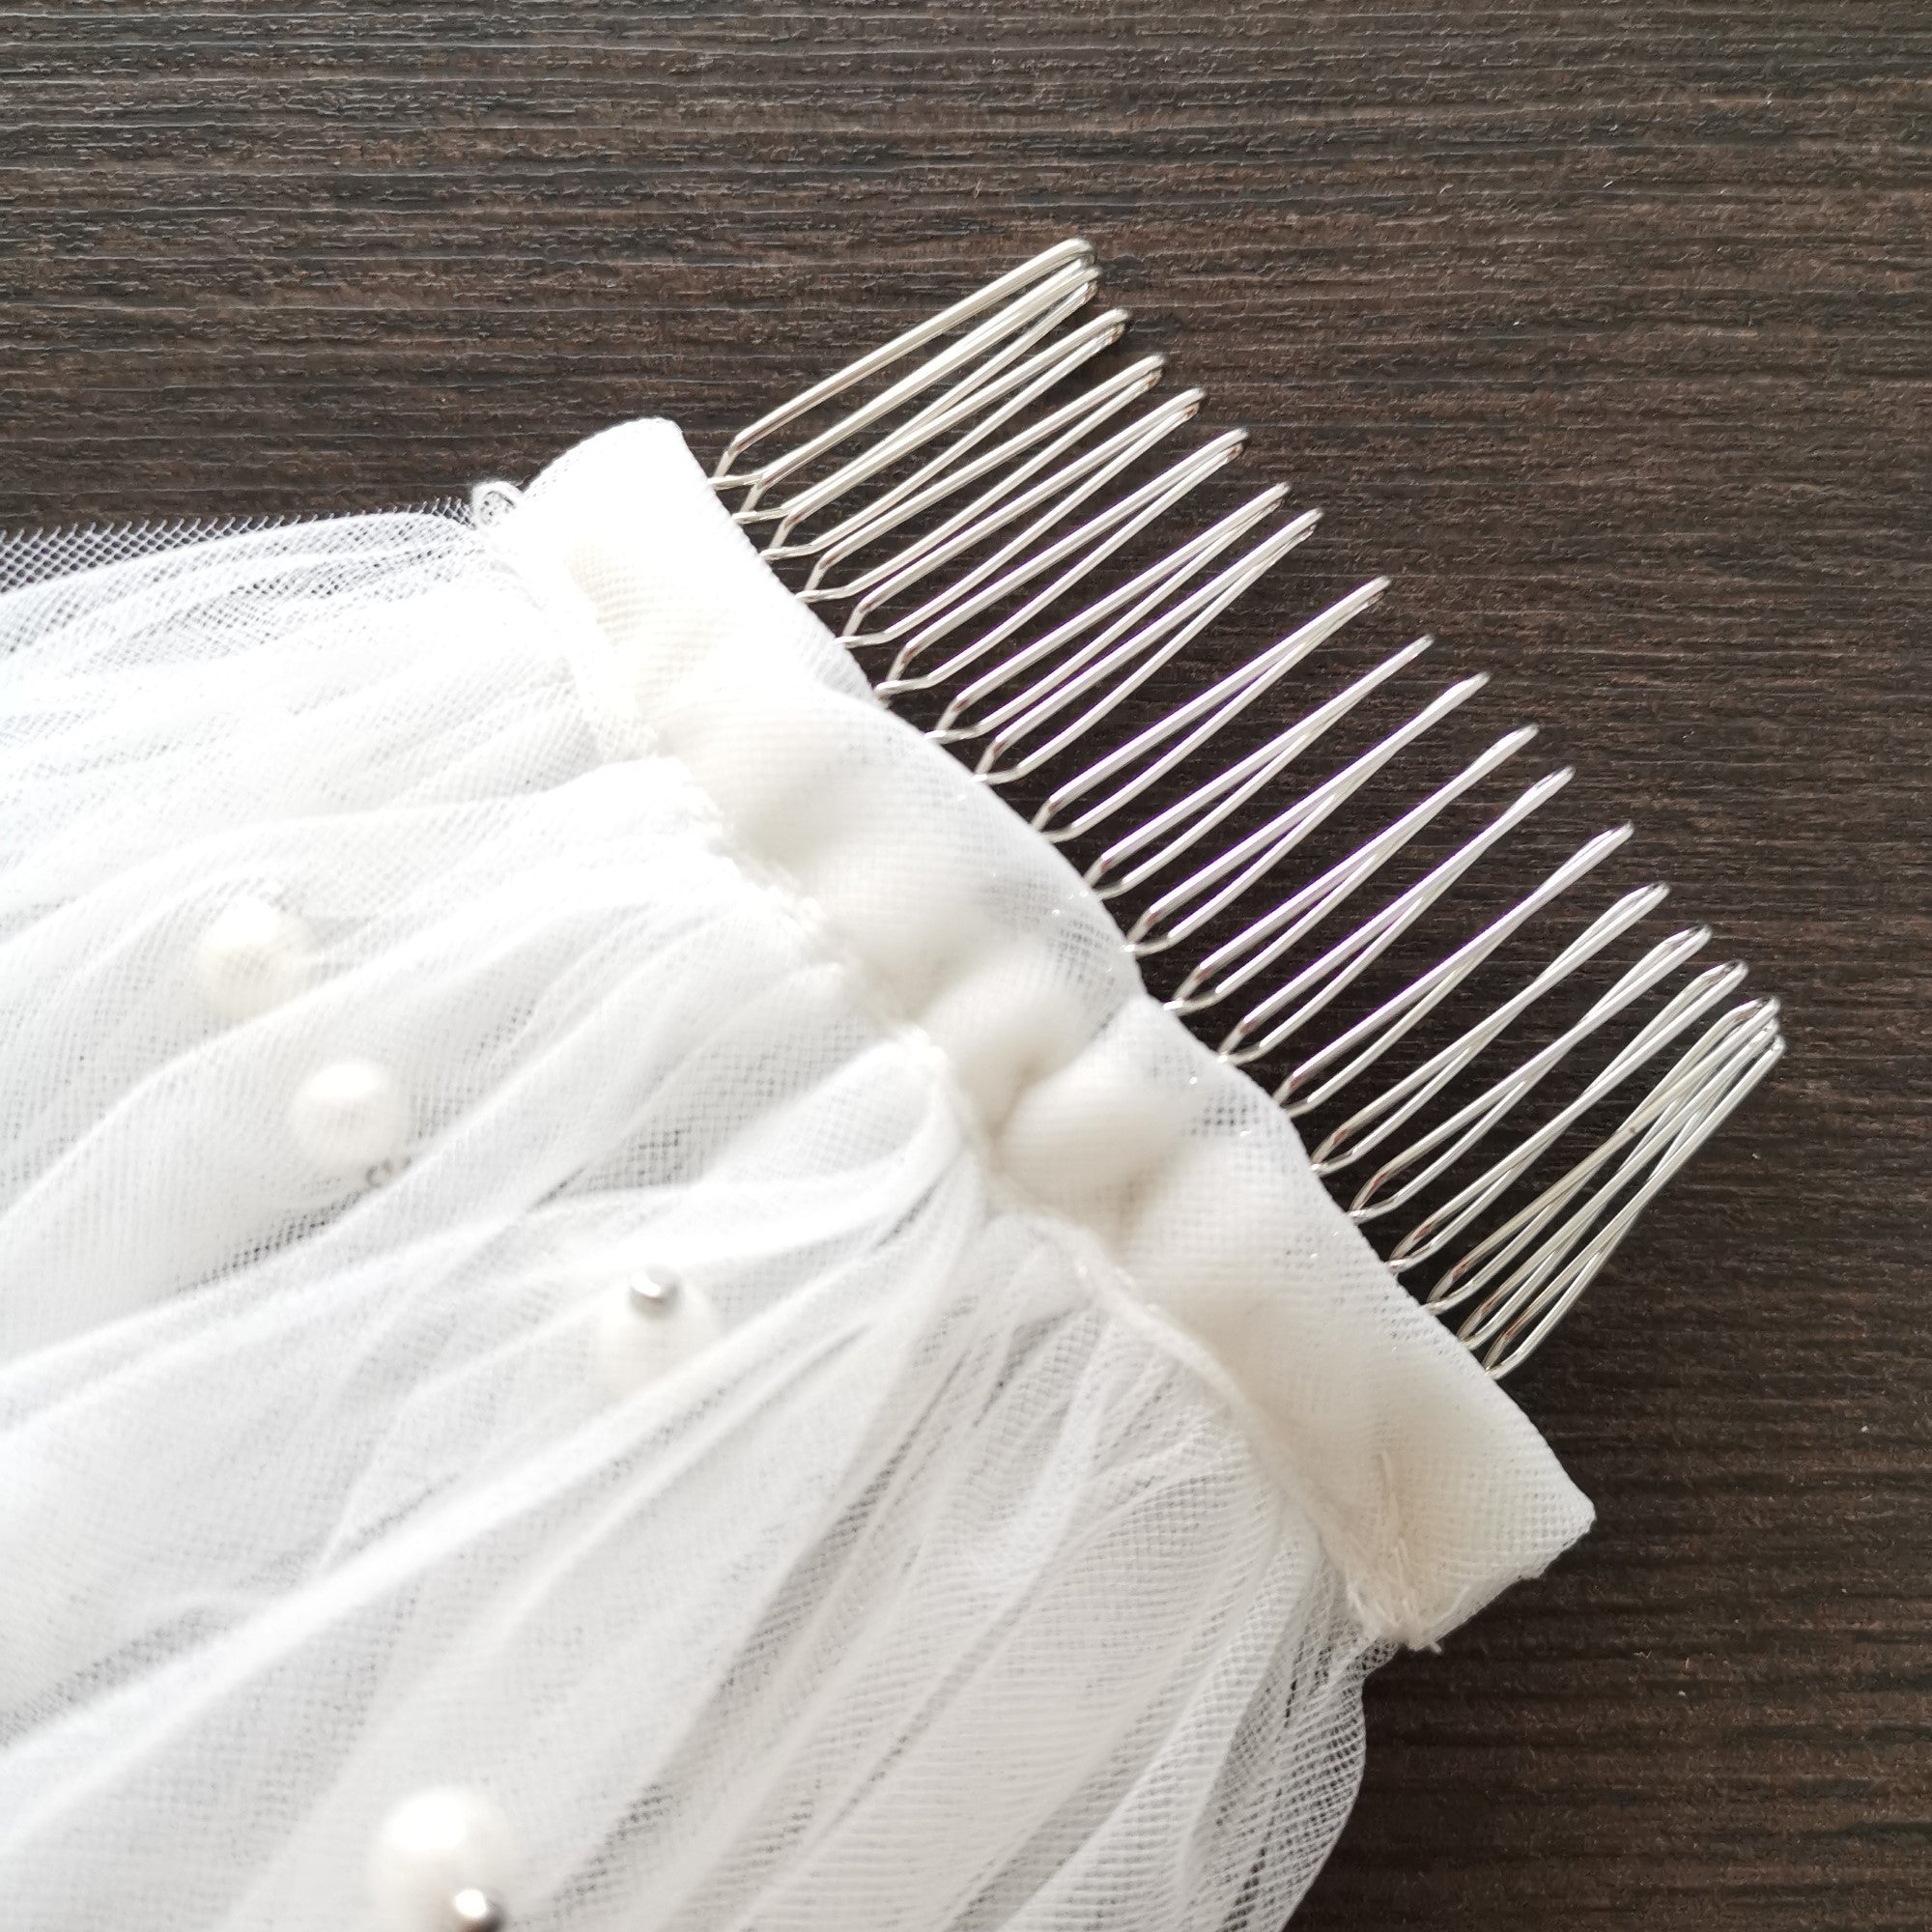 Ways to wear wedding comb